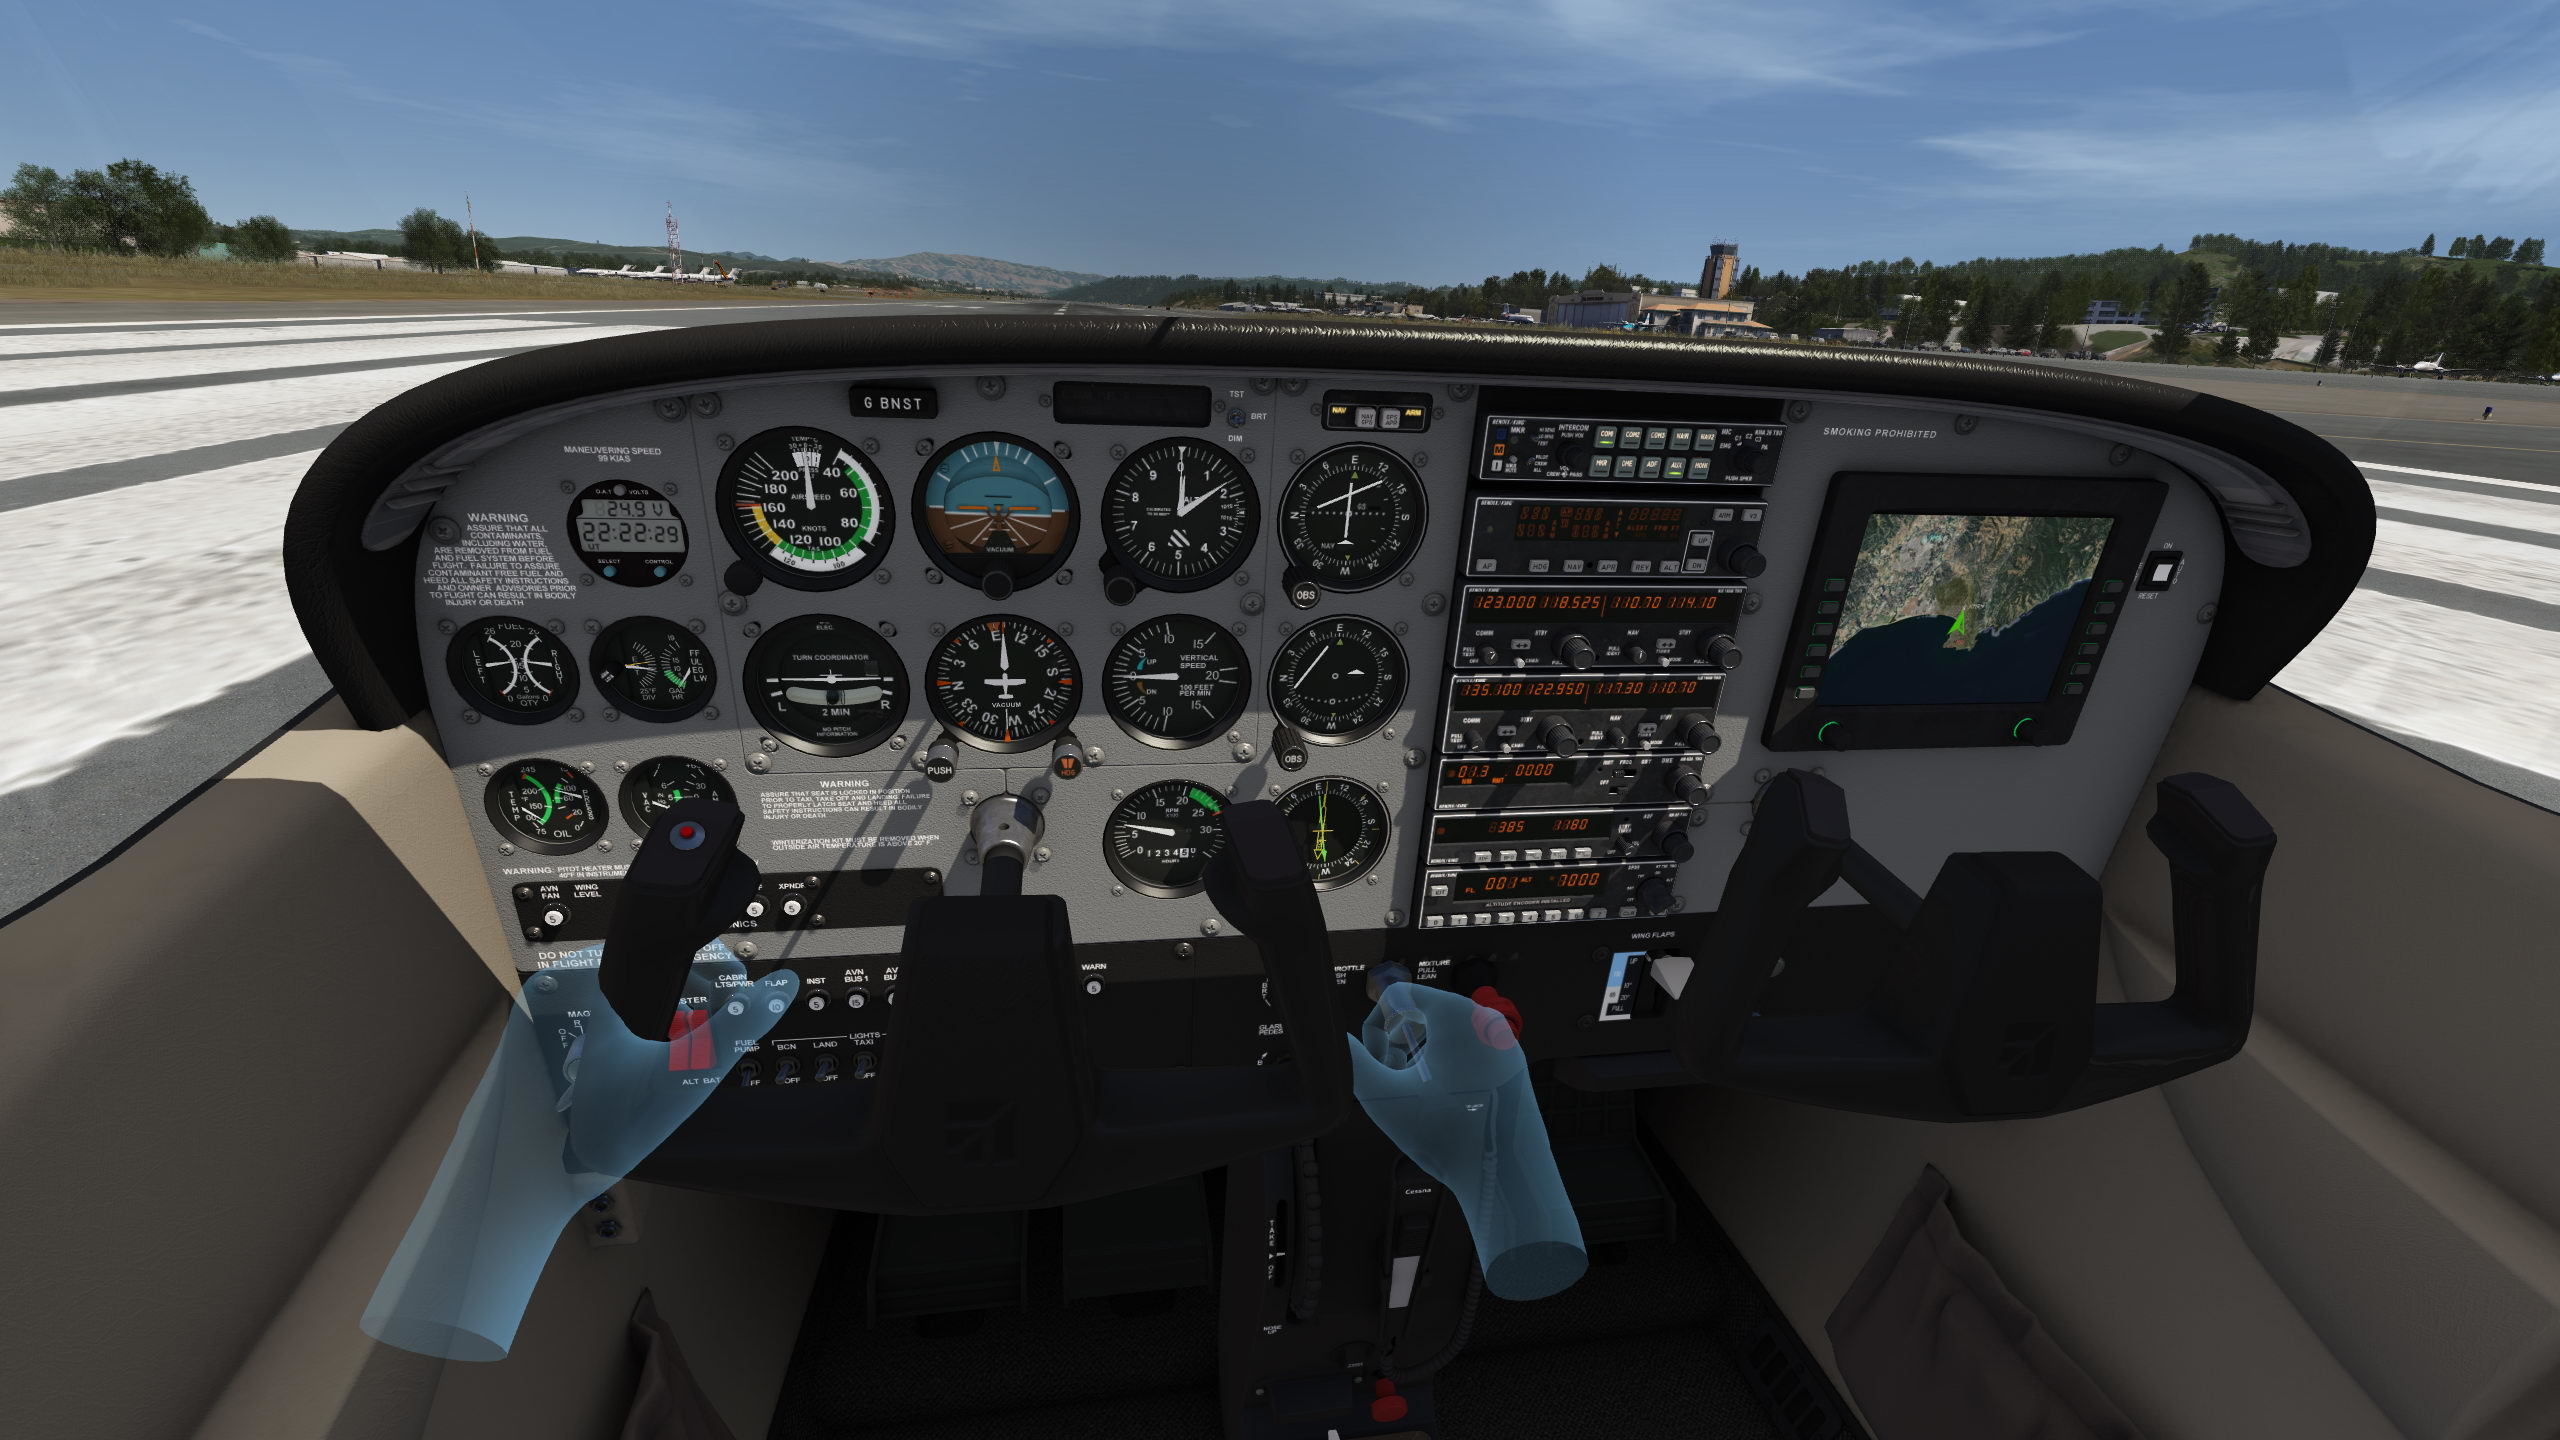 aerofly fs 2 flight simulator demo